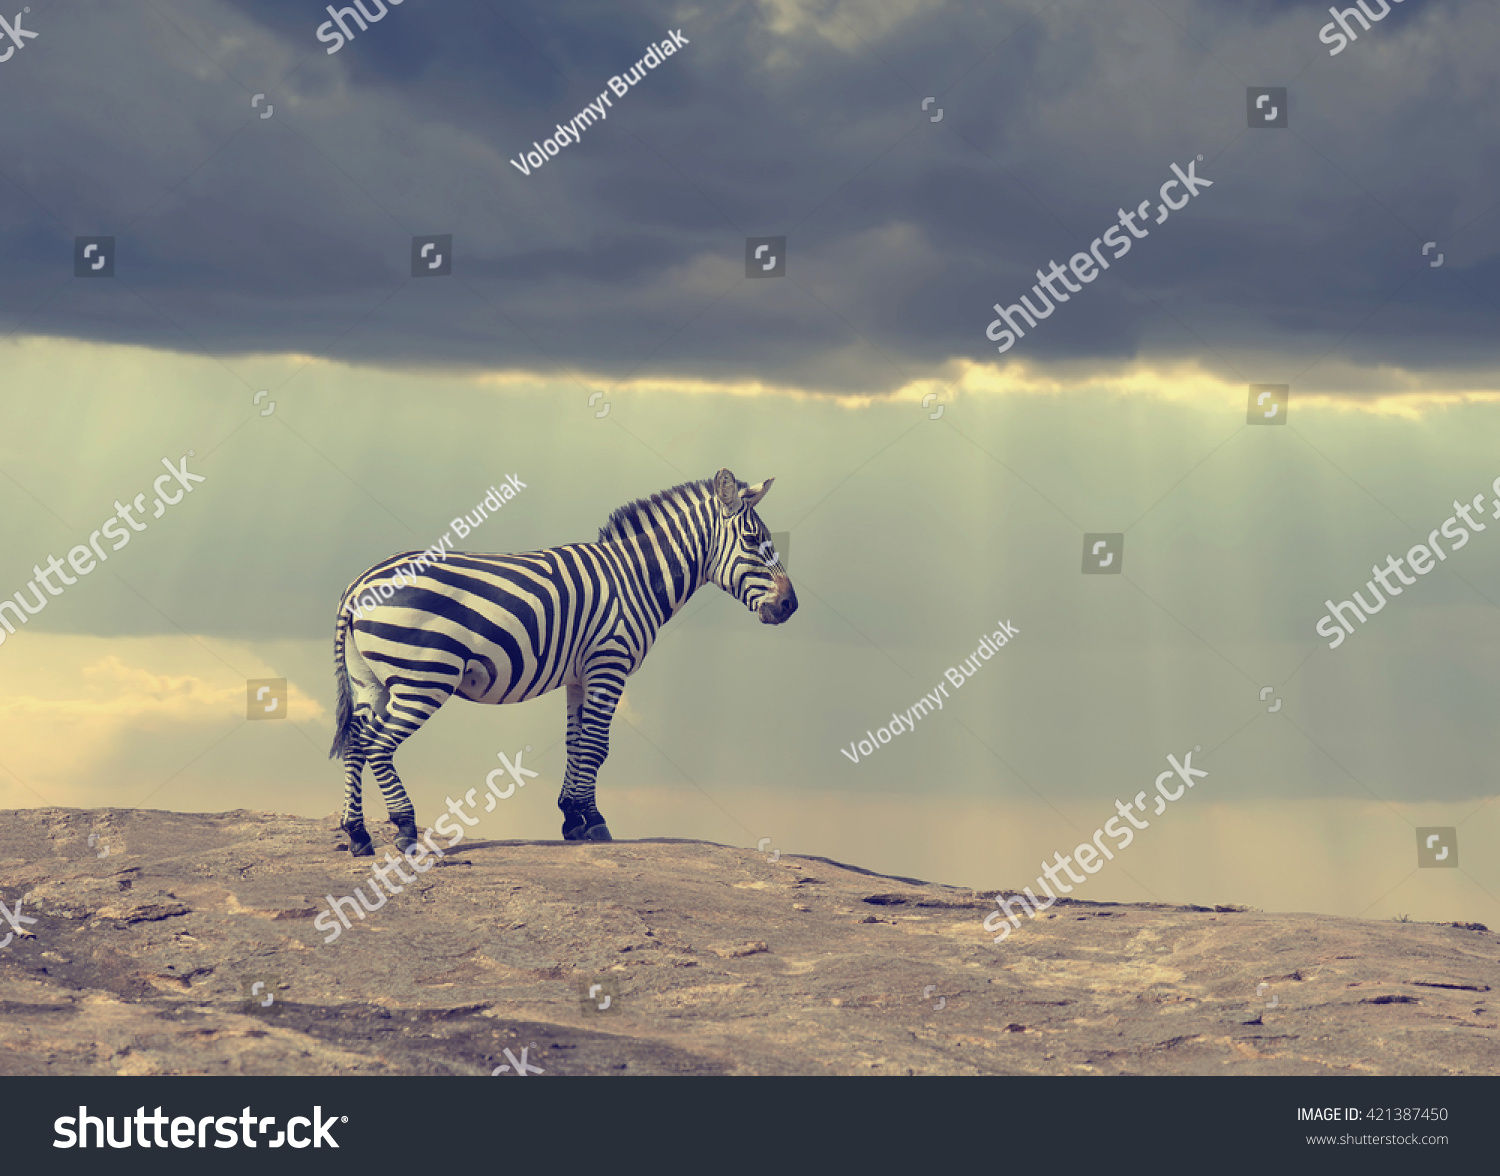 Zebra on stone in Africa, National park of Kenya #421387450